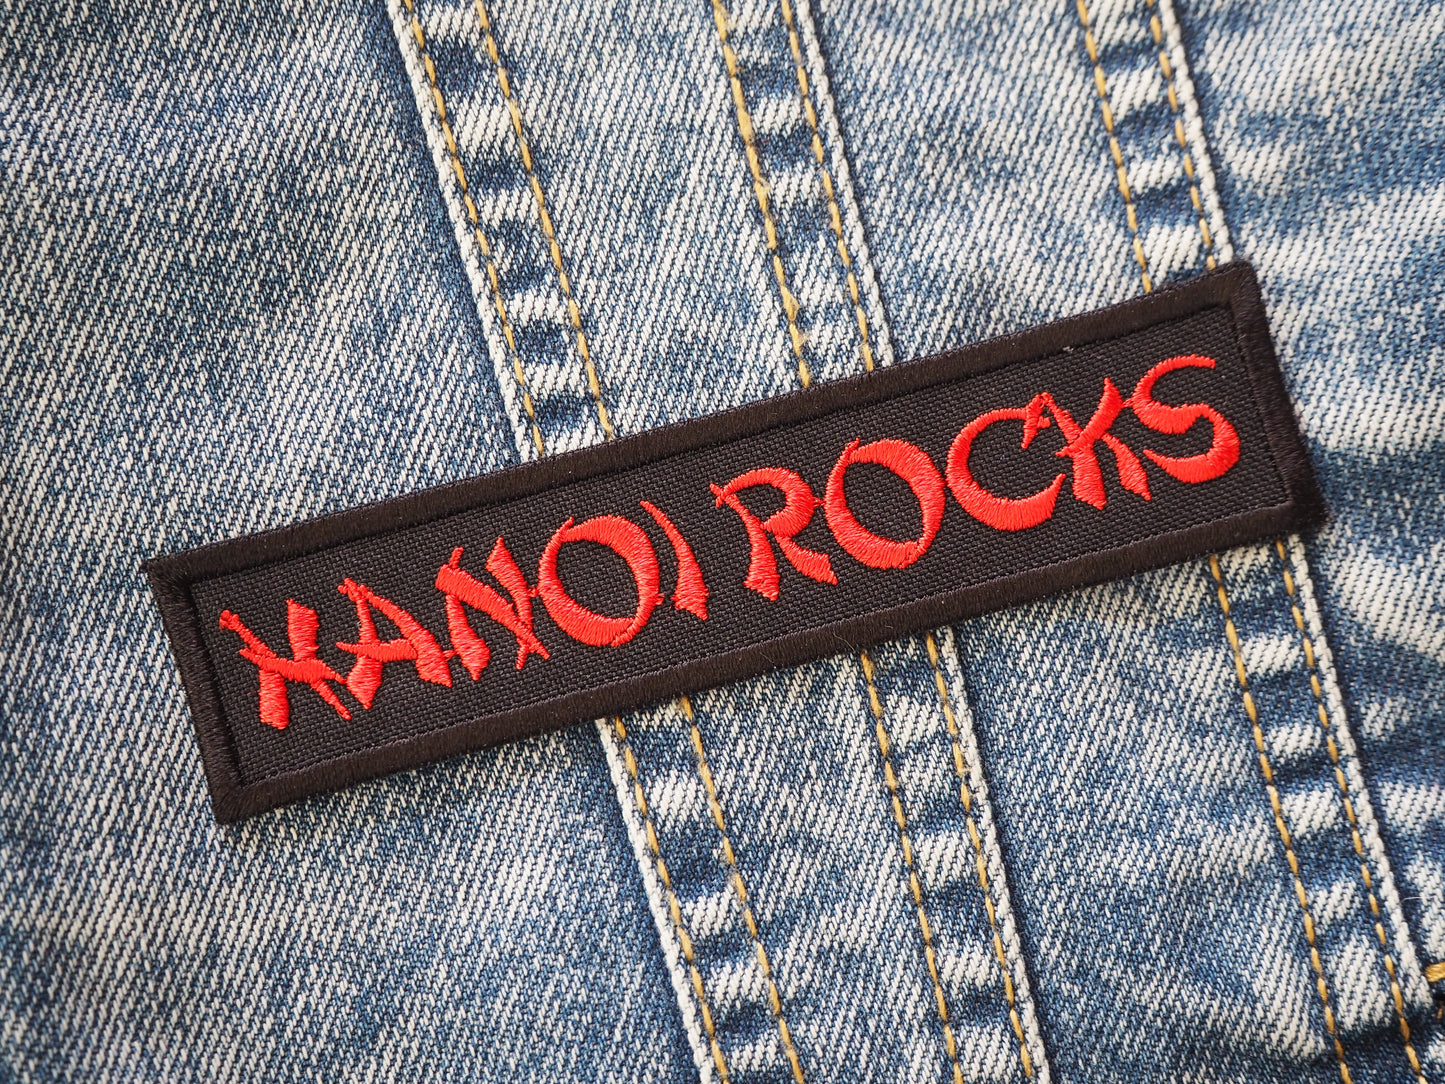 Hanoi Rocks Patch